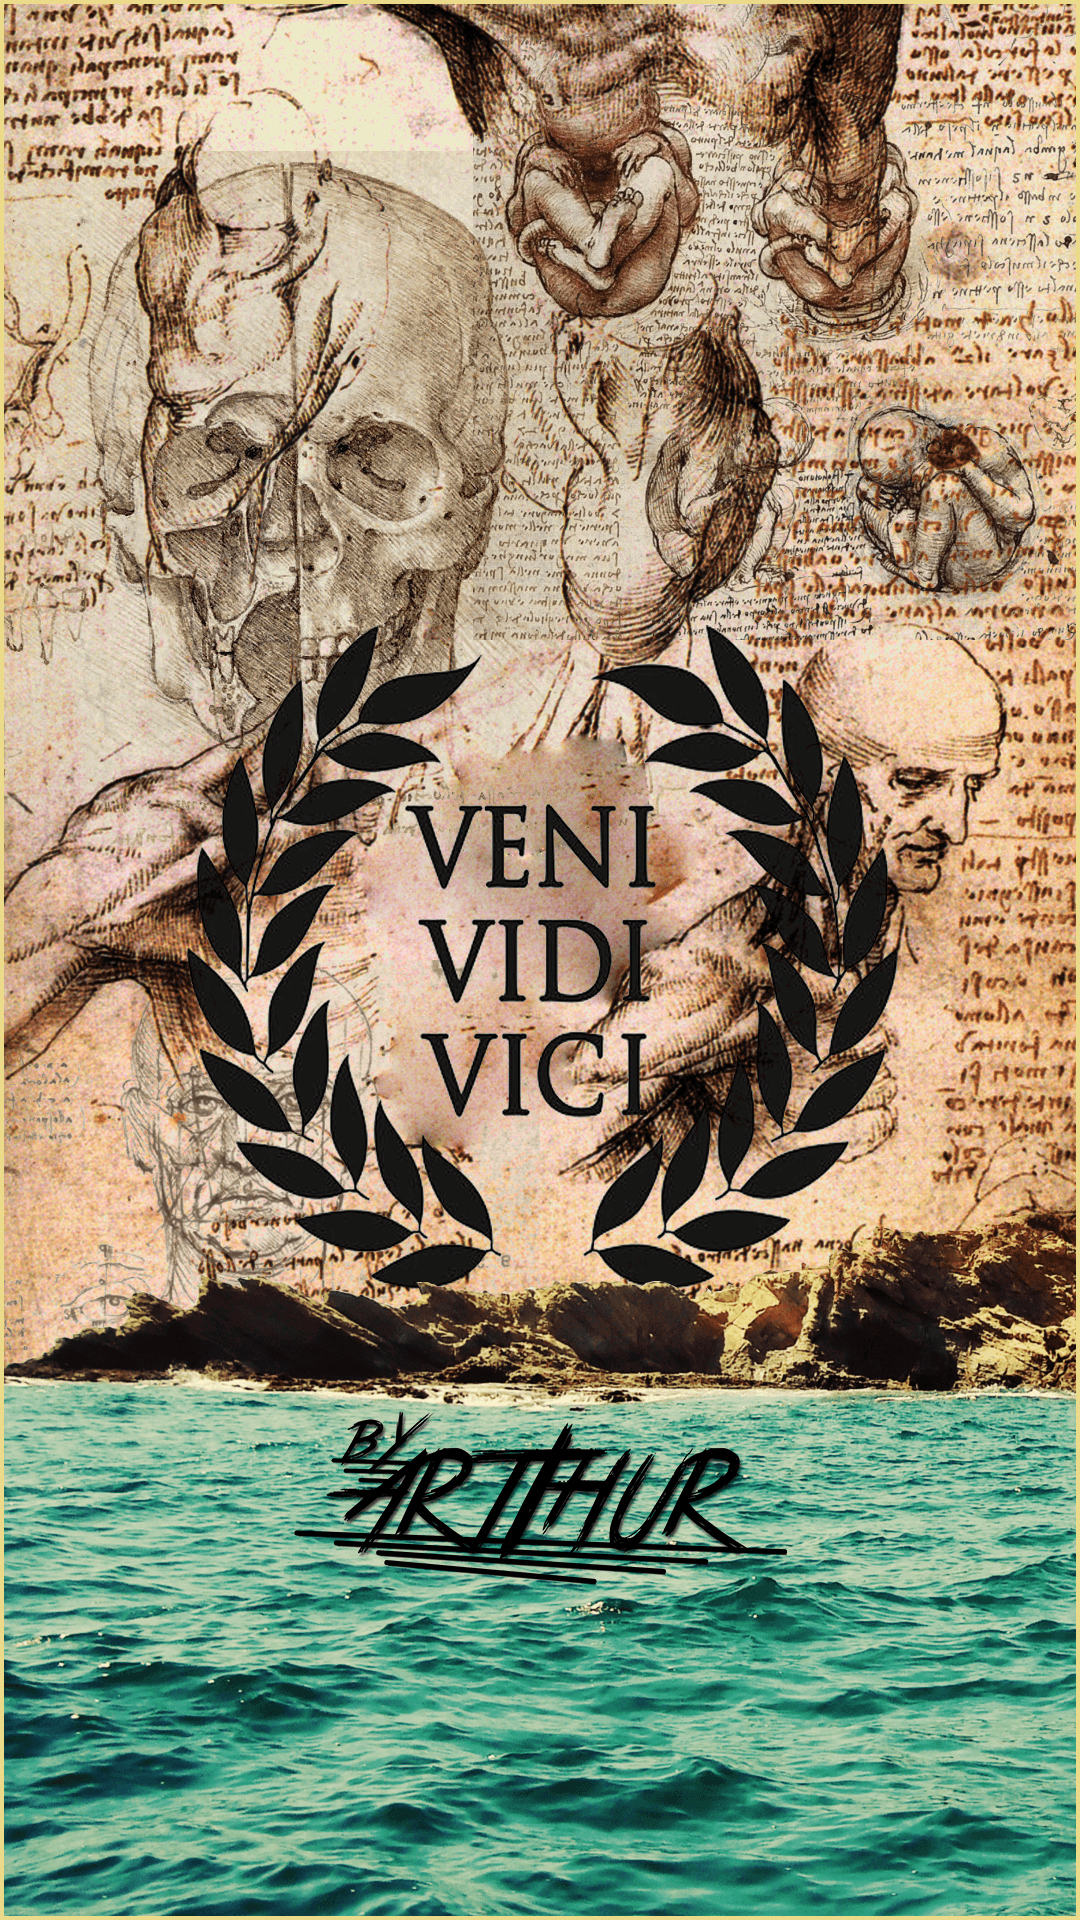 Veni Vidi Vici Wallpapers